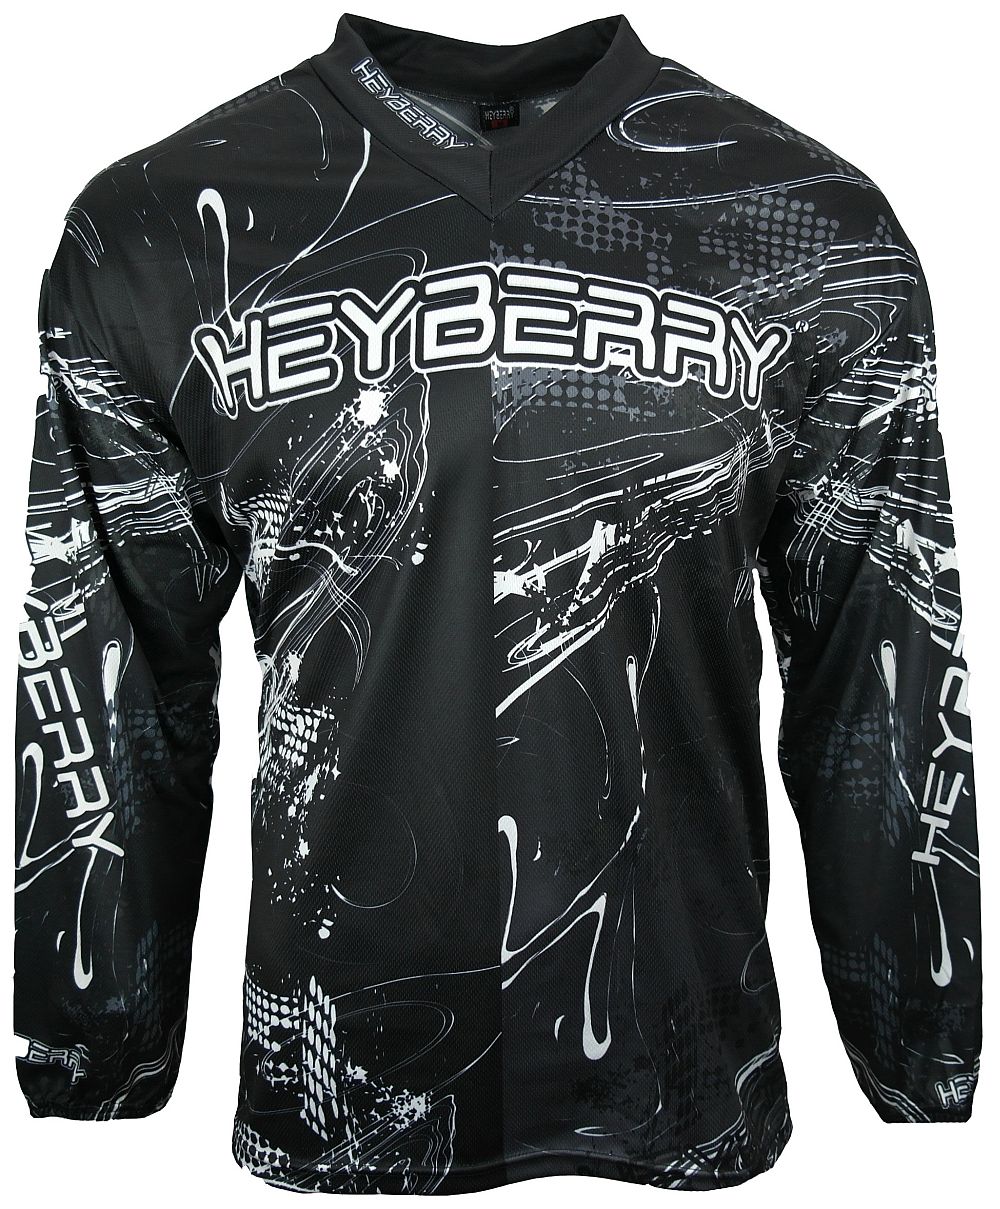 Heyberry Motocross MX Shirt Jersey schwarz rot Größe XXL